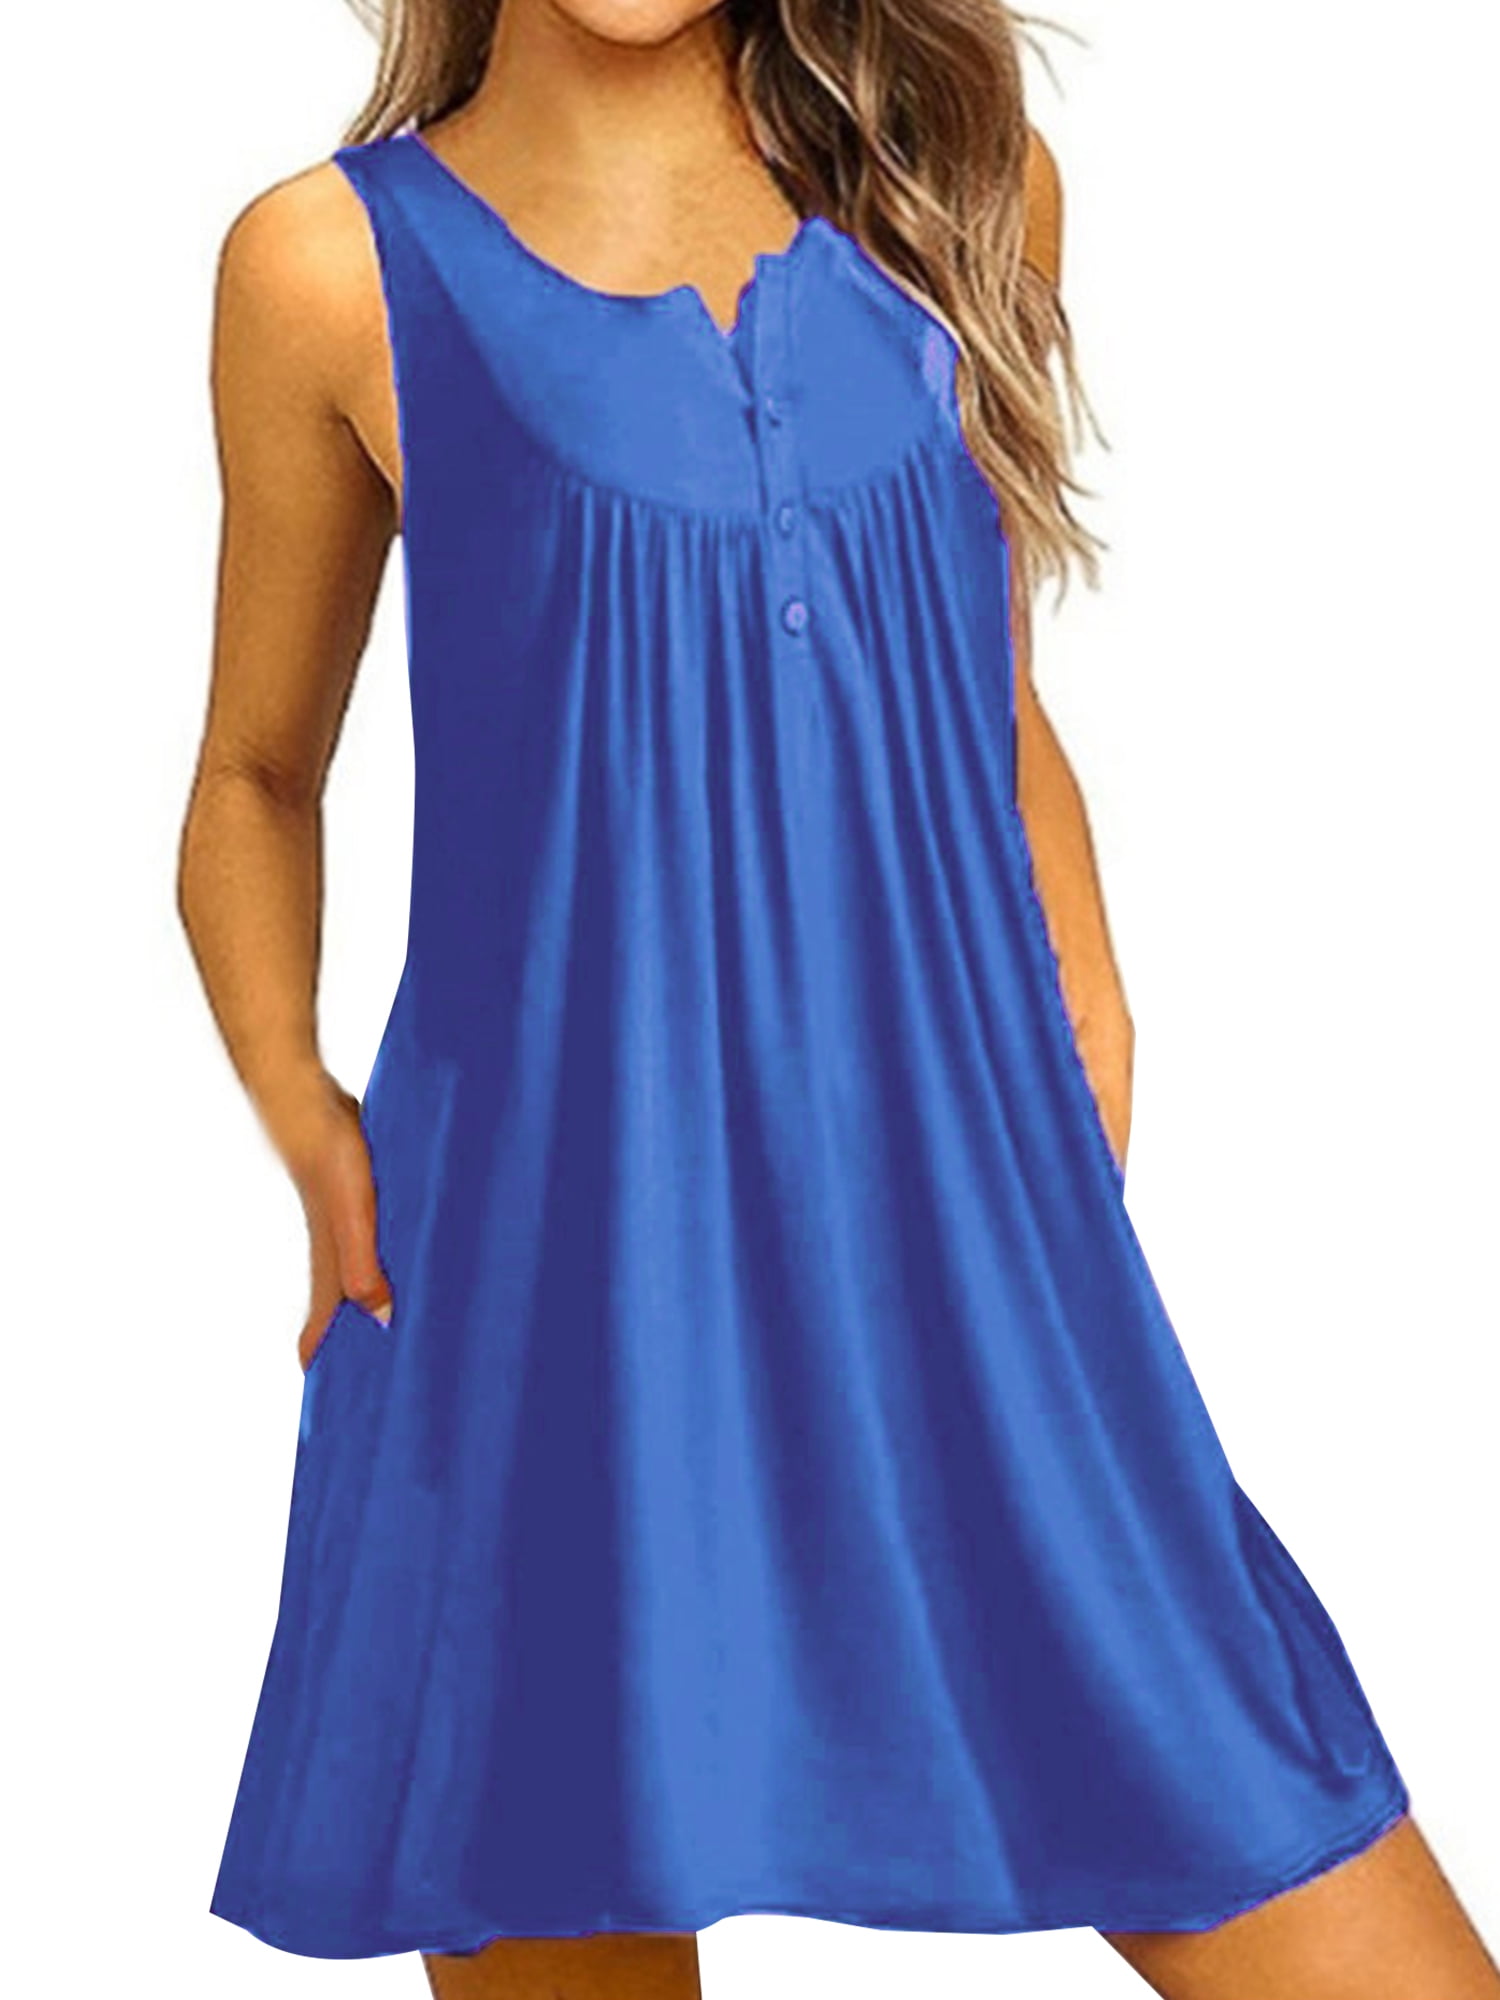 Sexy Dance Nightshirt for Women Sleeveless Sleepwear Nightgown V Neck ...